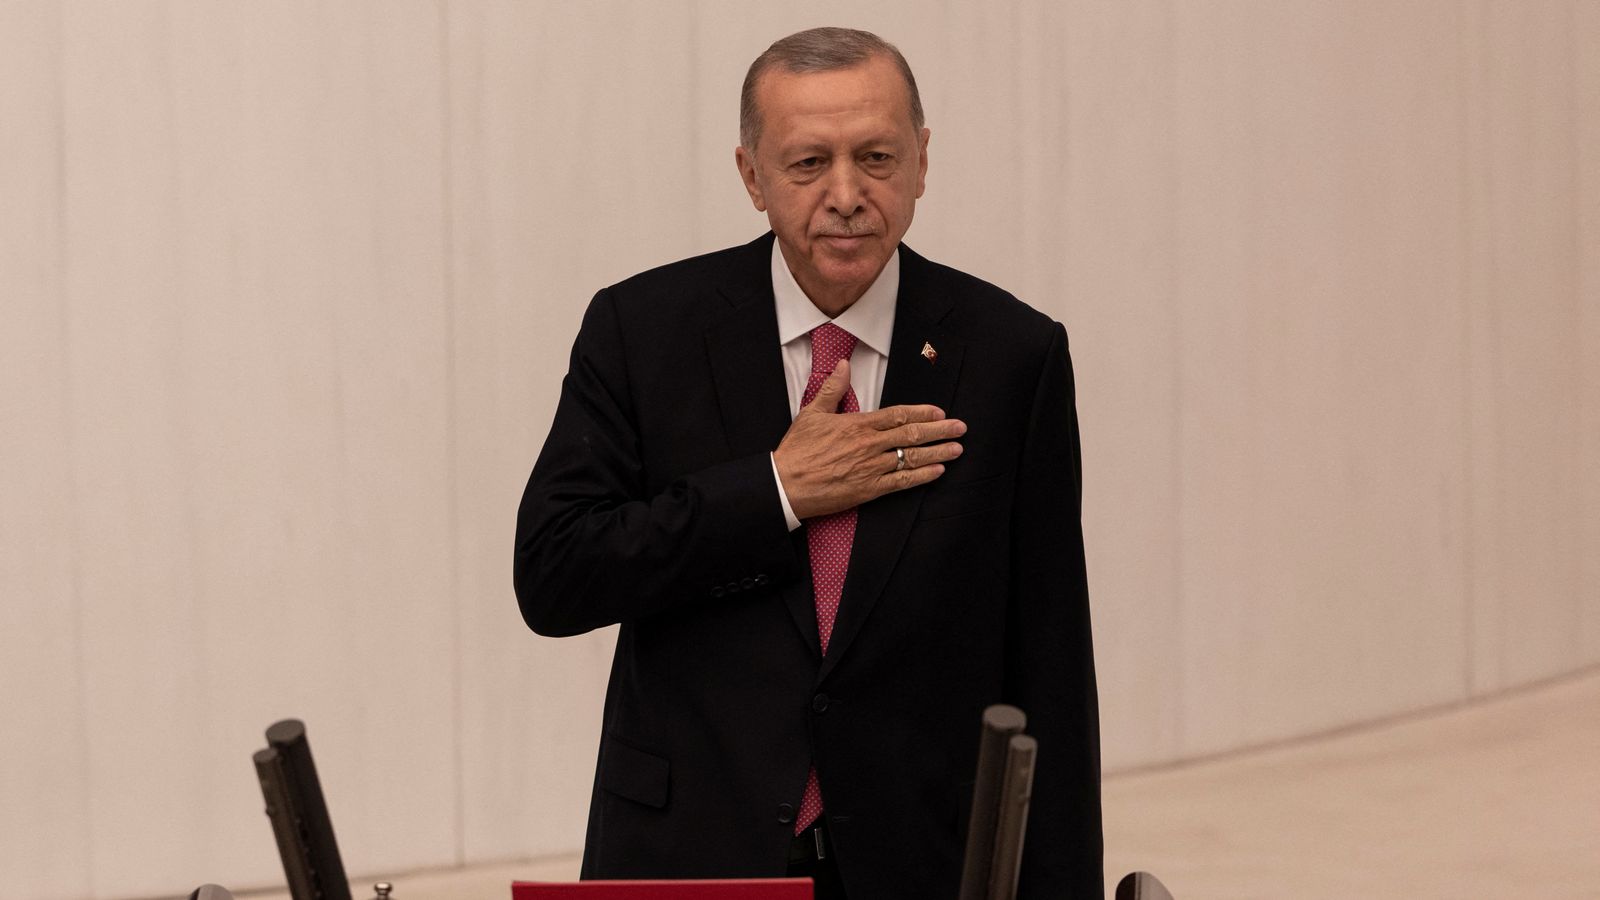 Recep Tayyip Erdogan sworn is as Turkey's president for unprecedented third term